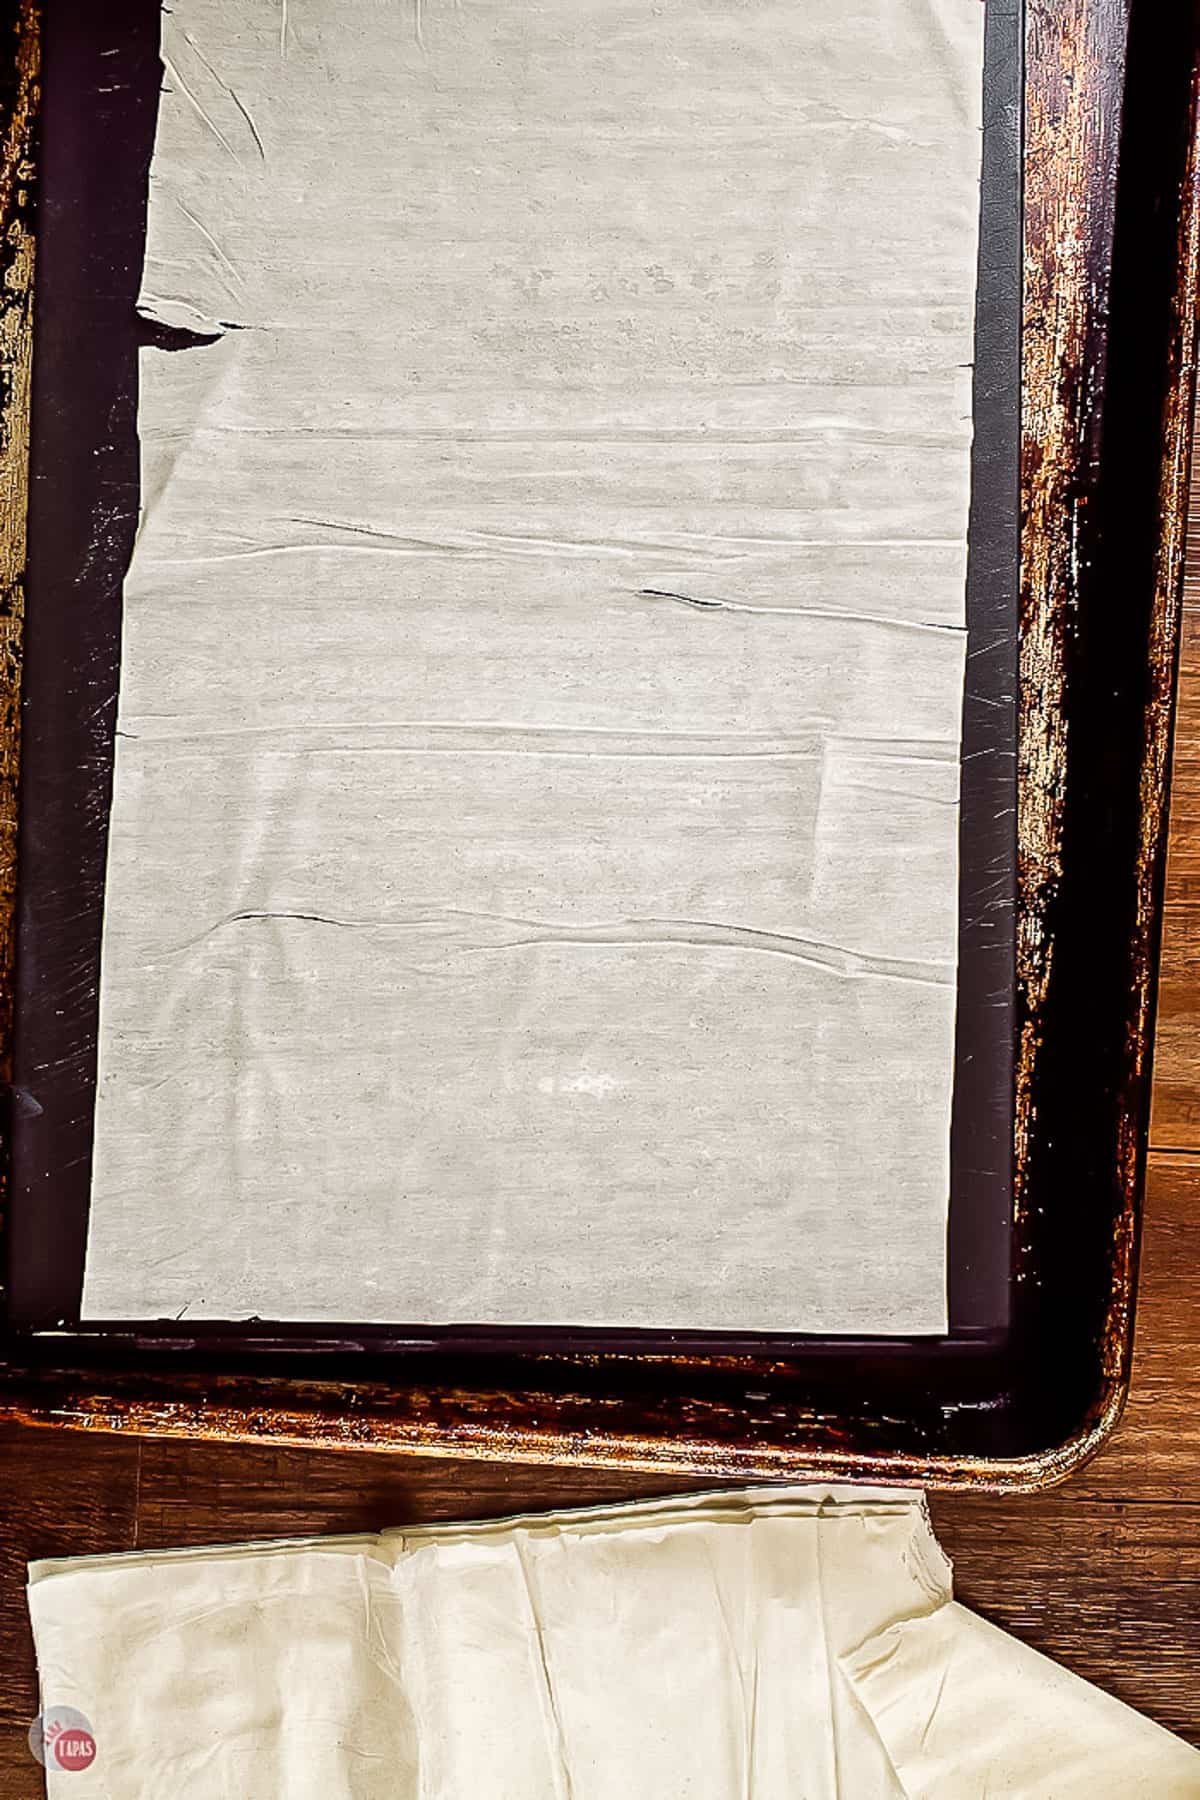 sheet of phyllo dough on a baking sheet